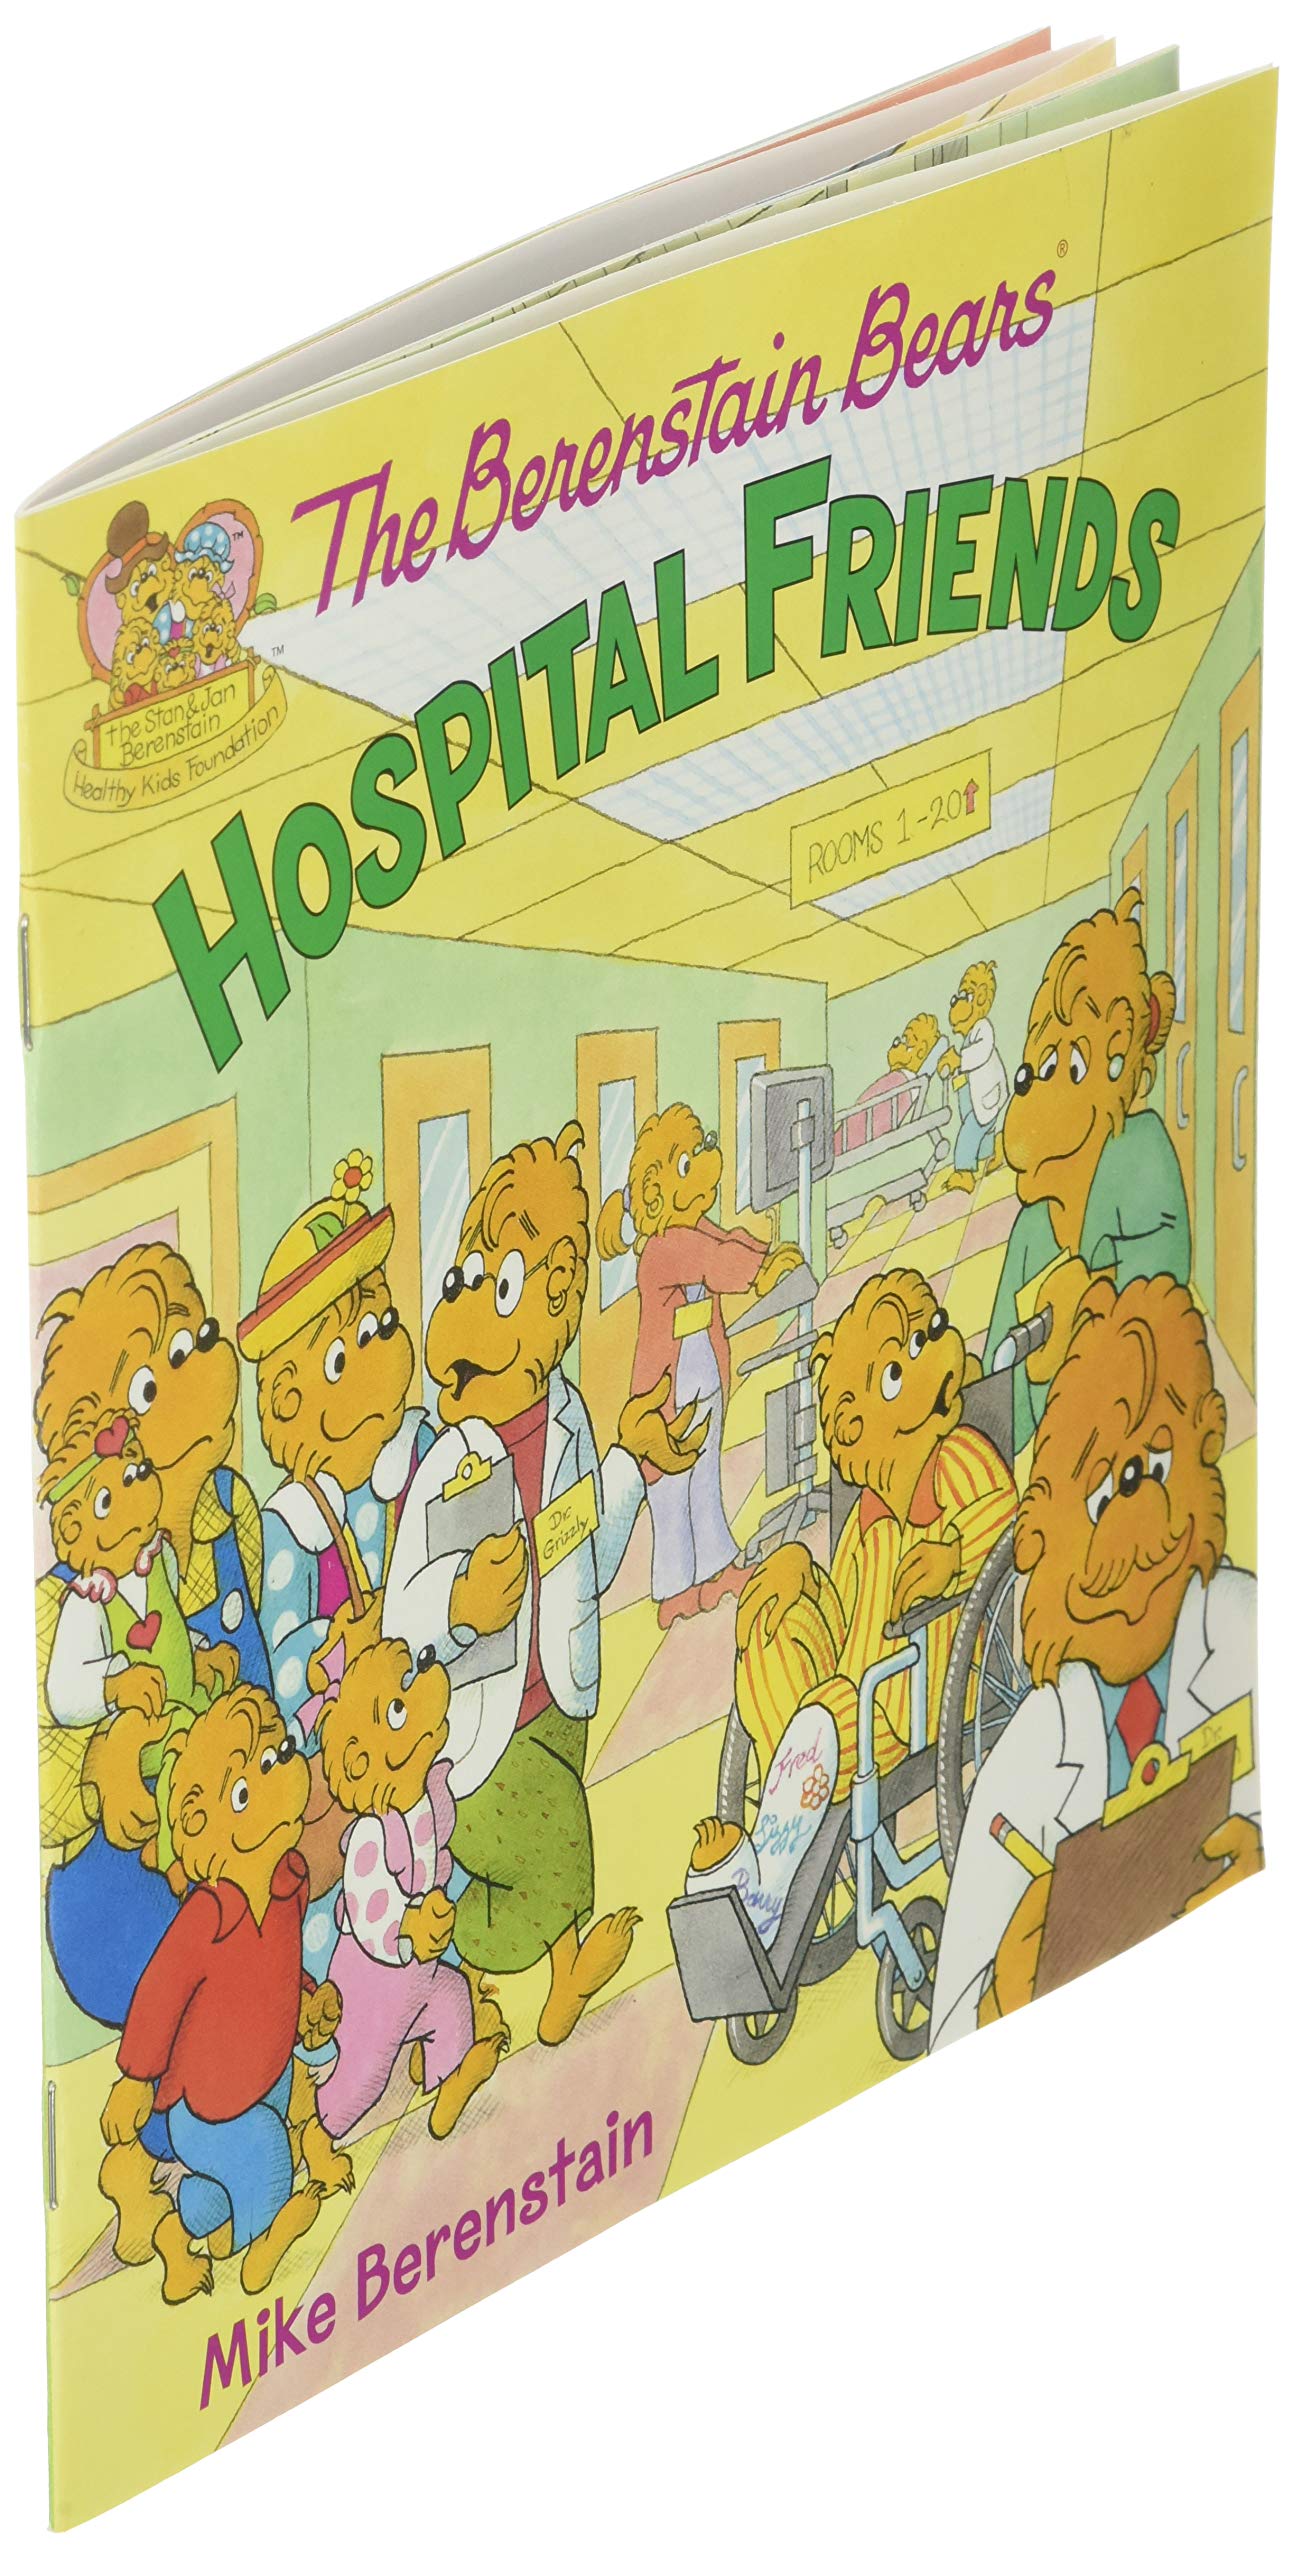 The Berenstain Bears: Hospital Friends